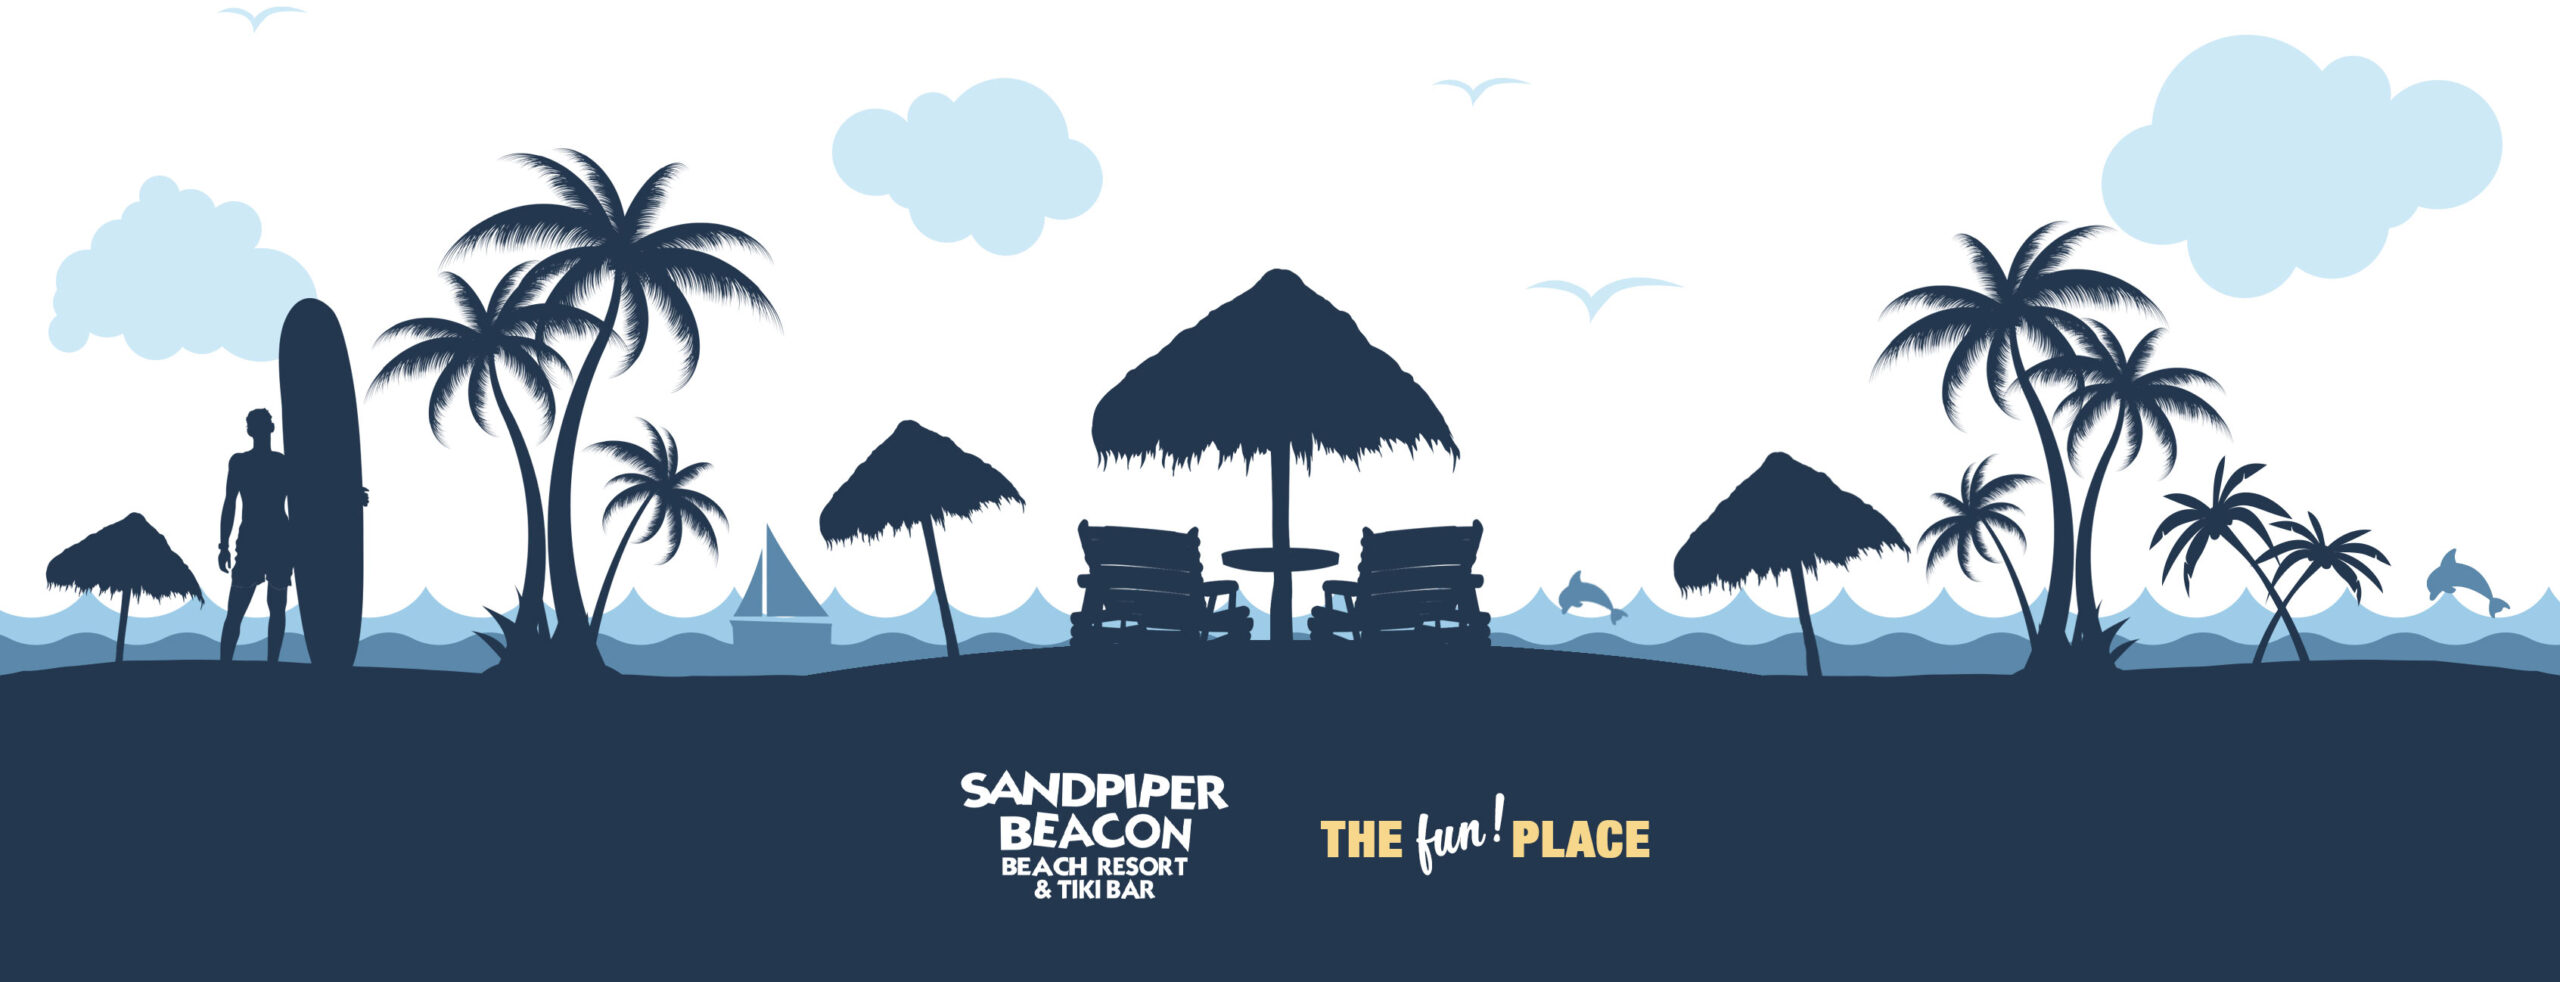 sandpiper beacon beach resort footer`